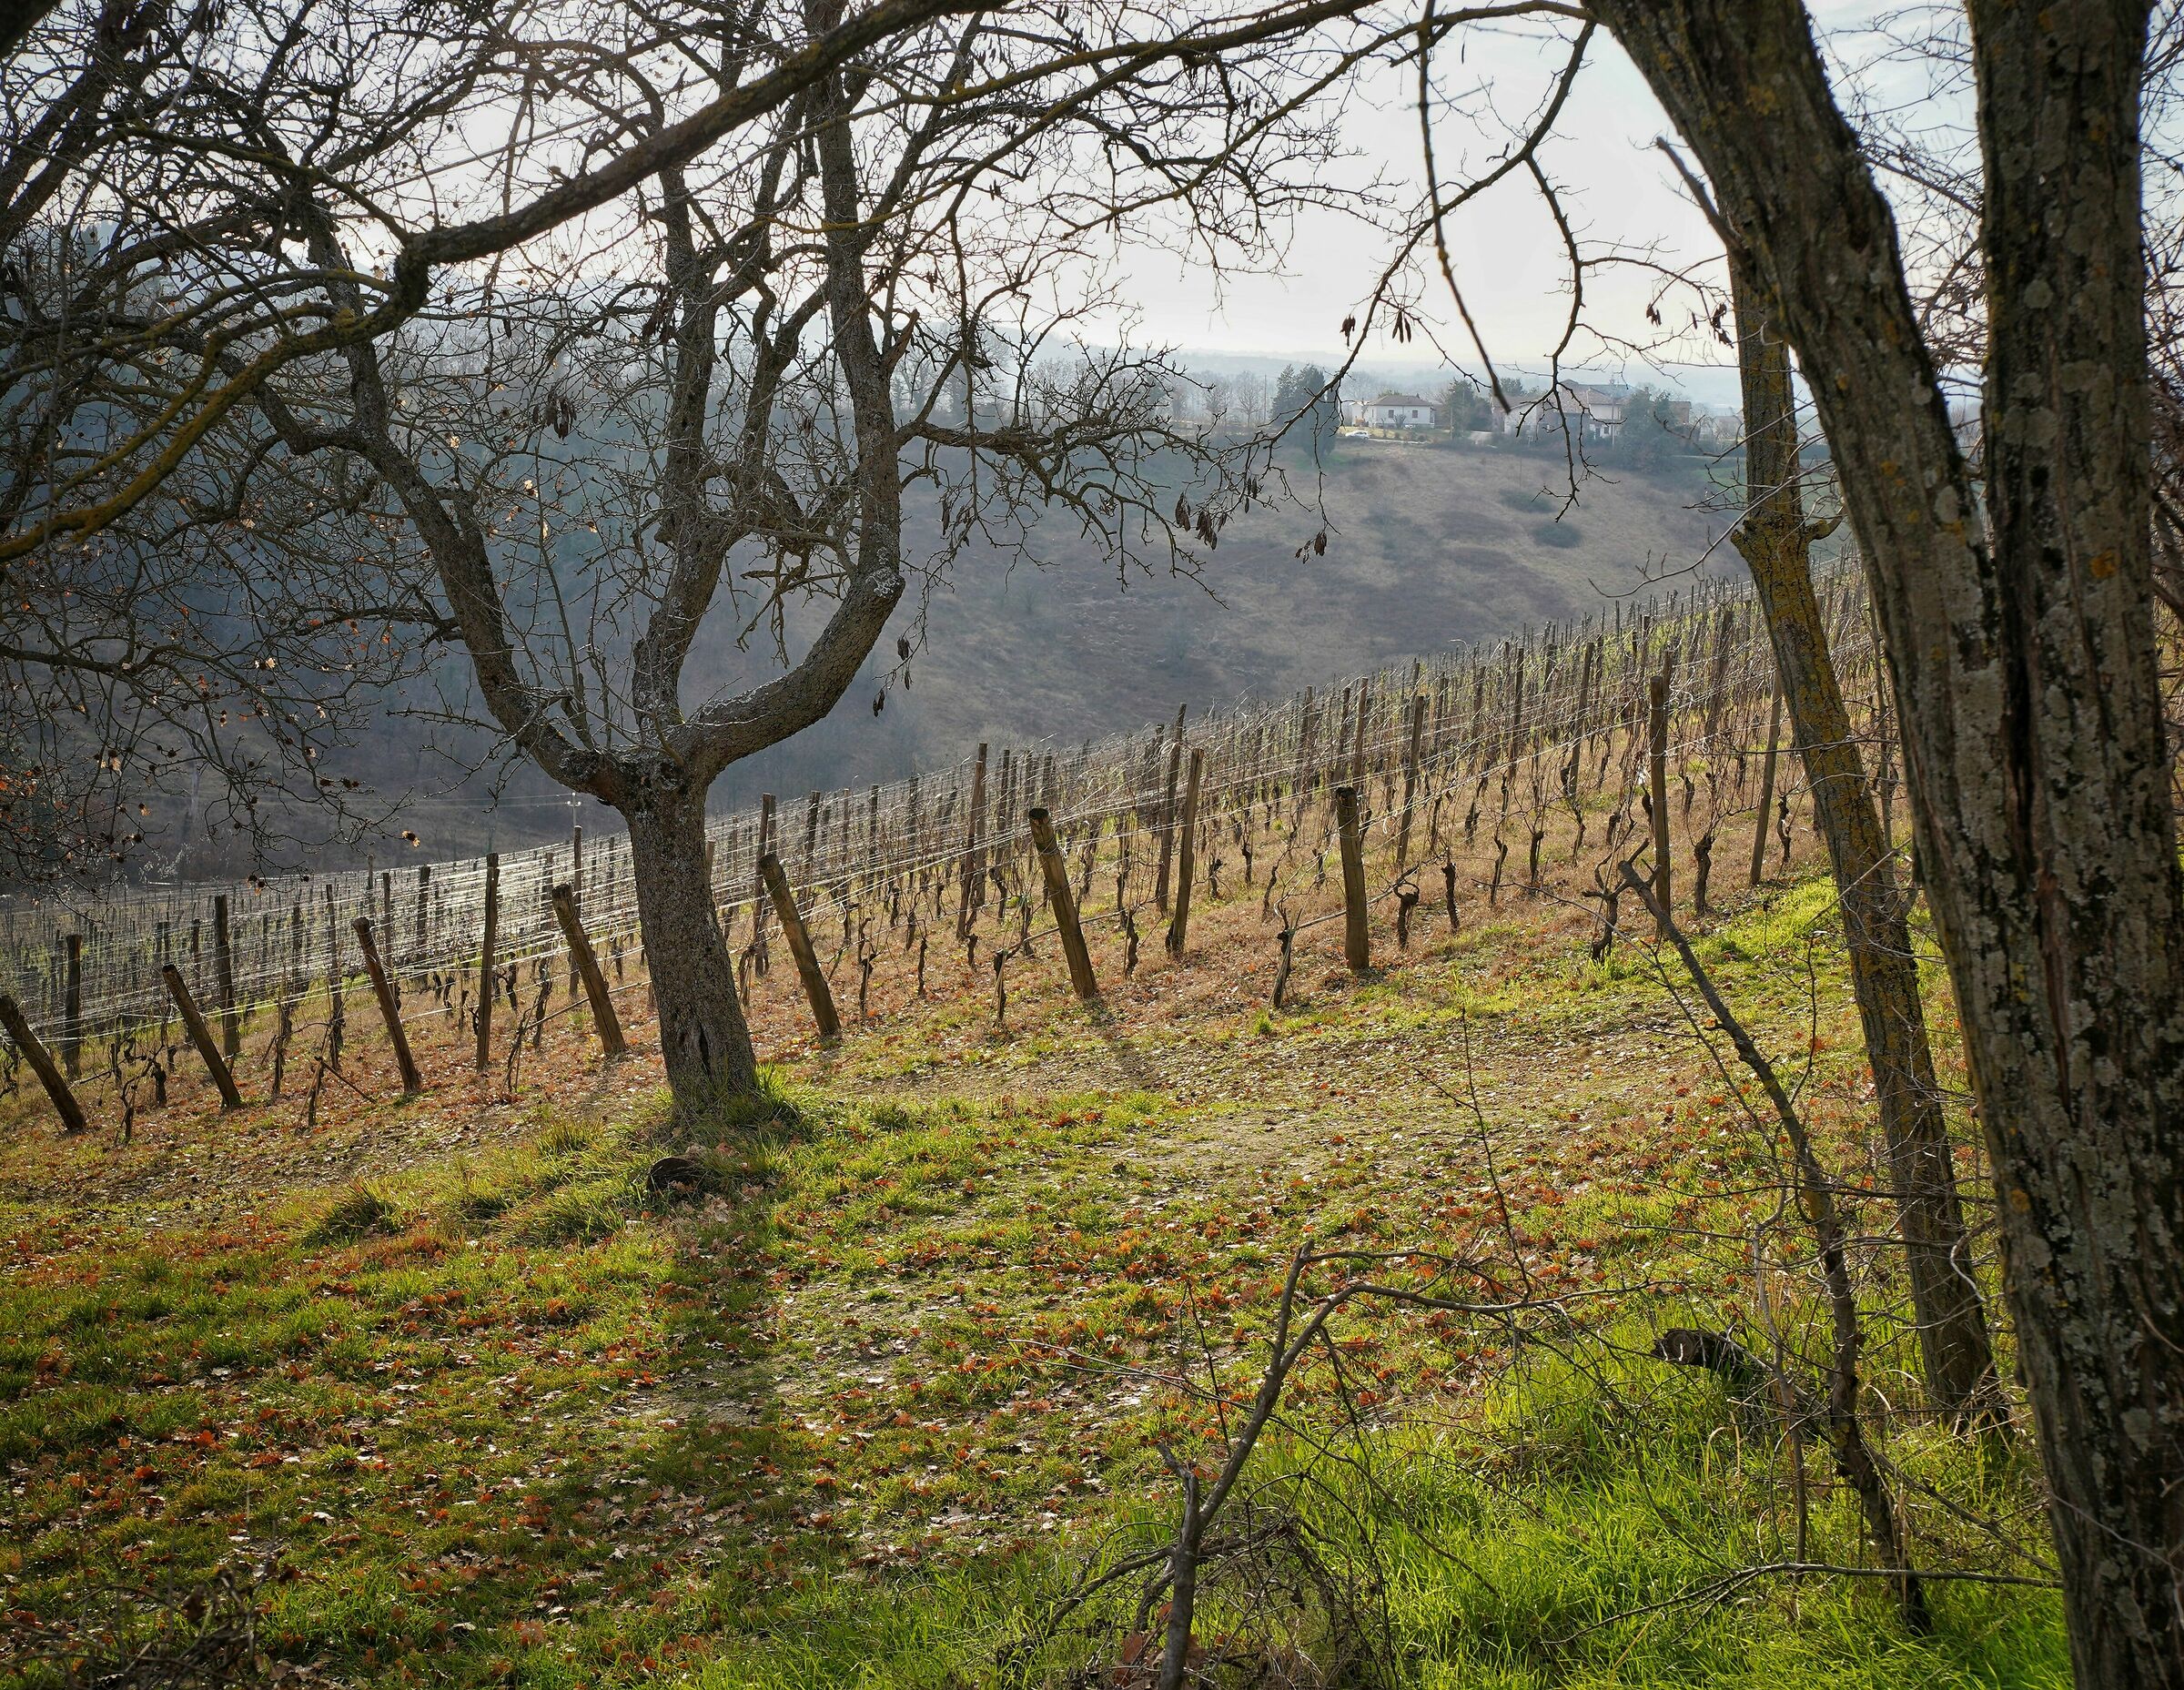 The vineyard in winter...